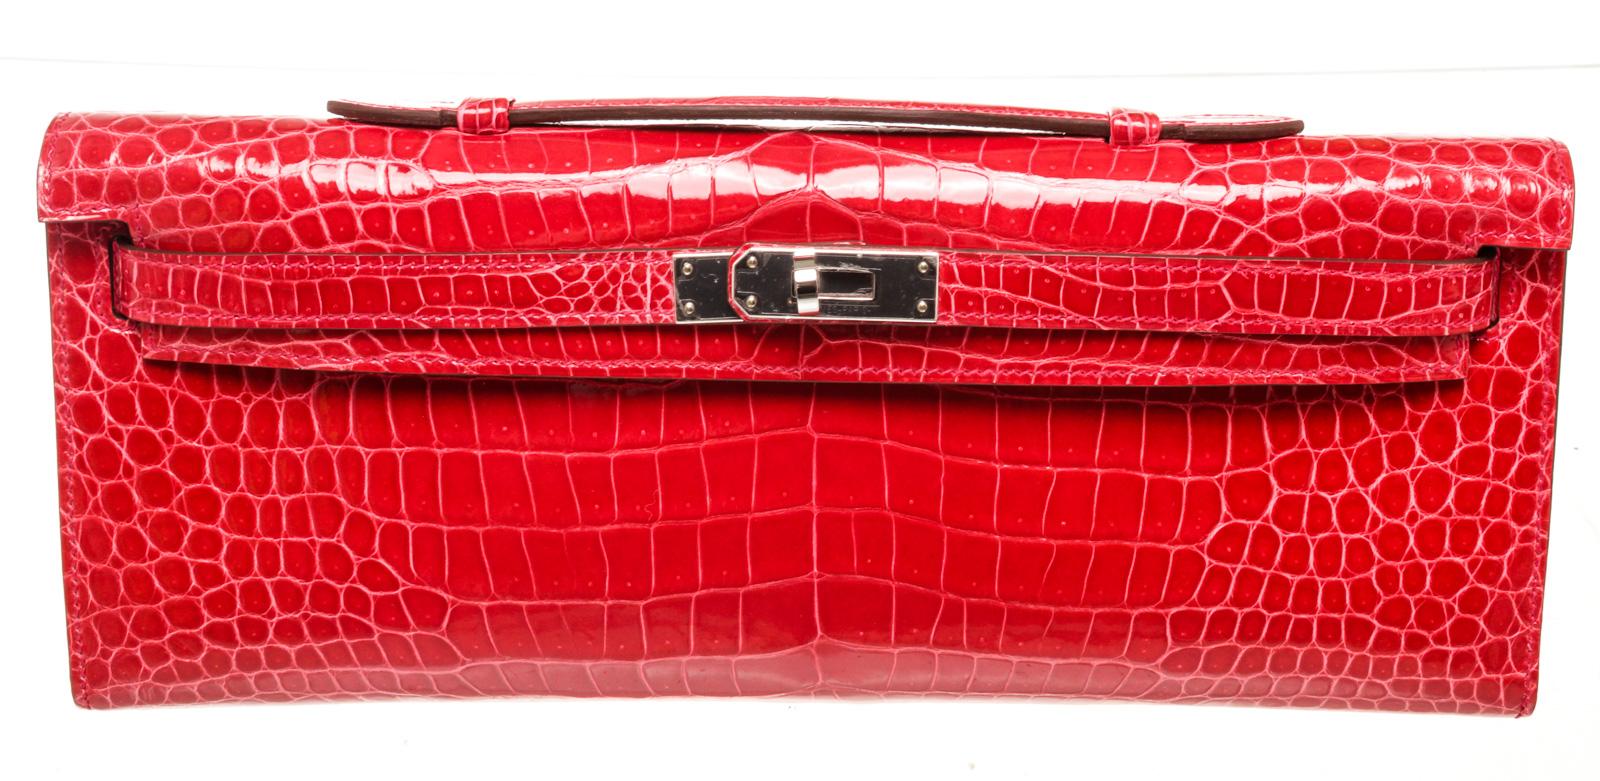 Hermes Red Electric Crocodile Kelly Cut Clutch Bag with leather, gold-toneÂ hardware, trim leather, interiorÂ slip pocketÂ and turn lockÂ closure.

50598MSC